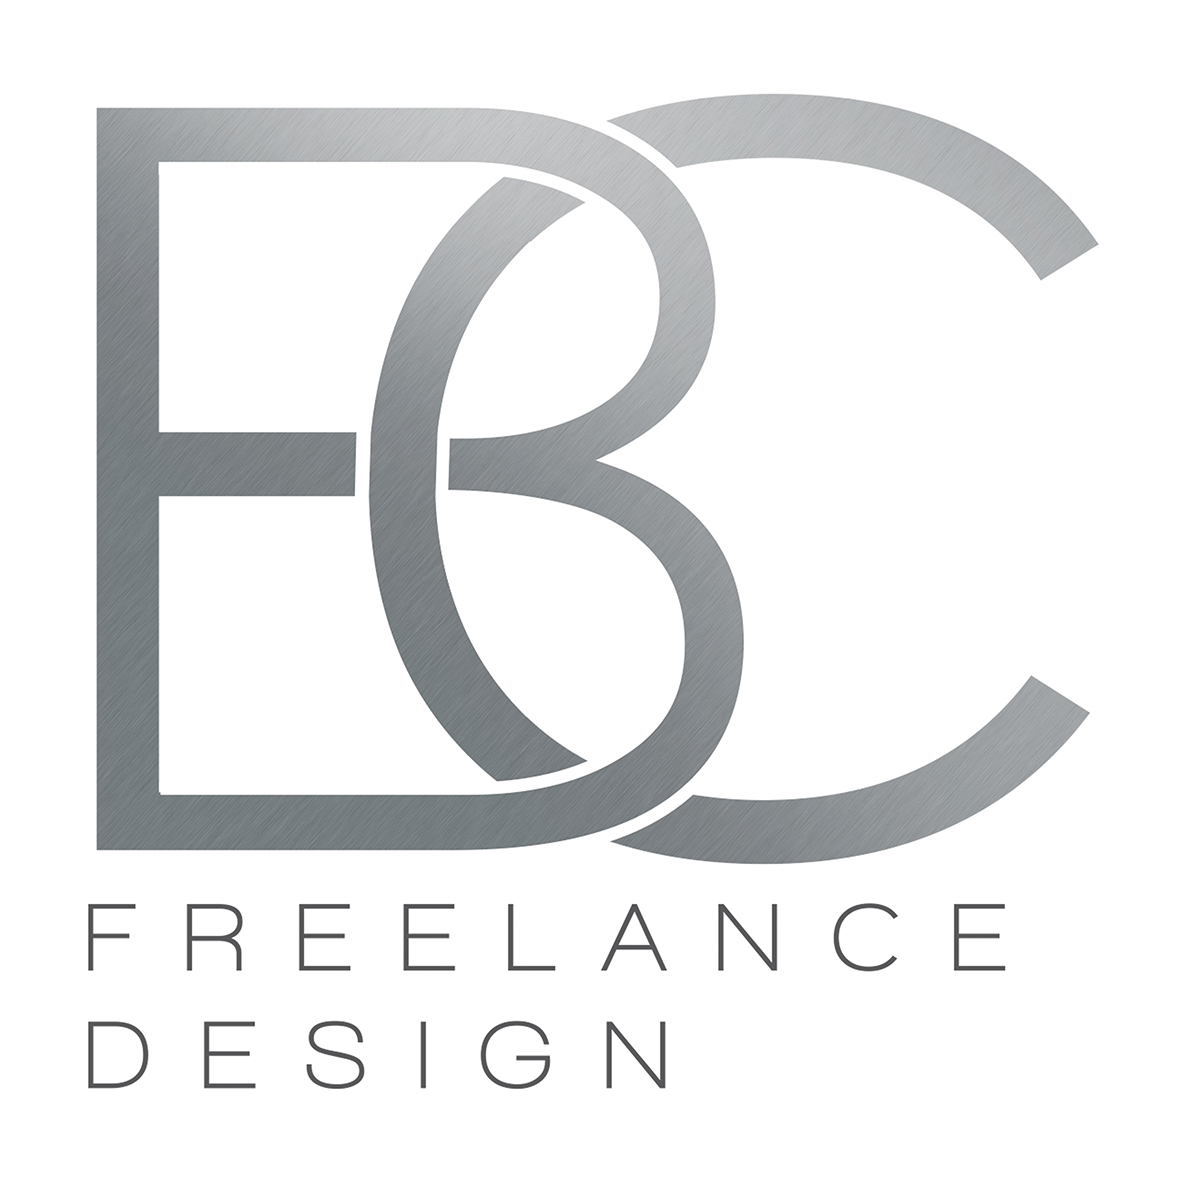 BC freelance design - WA Accommodation